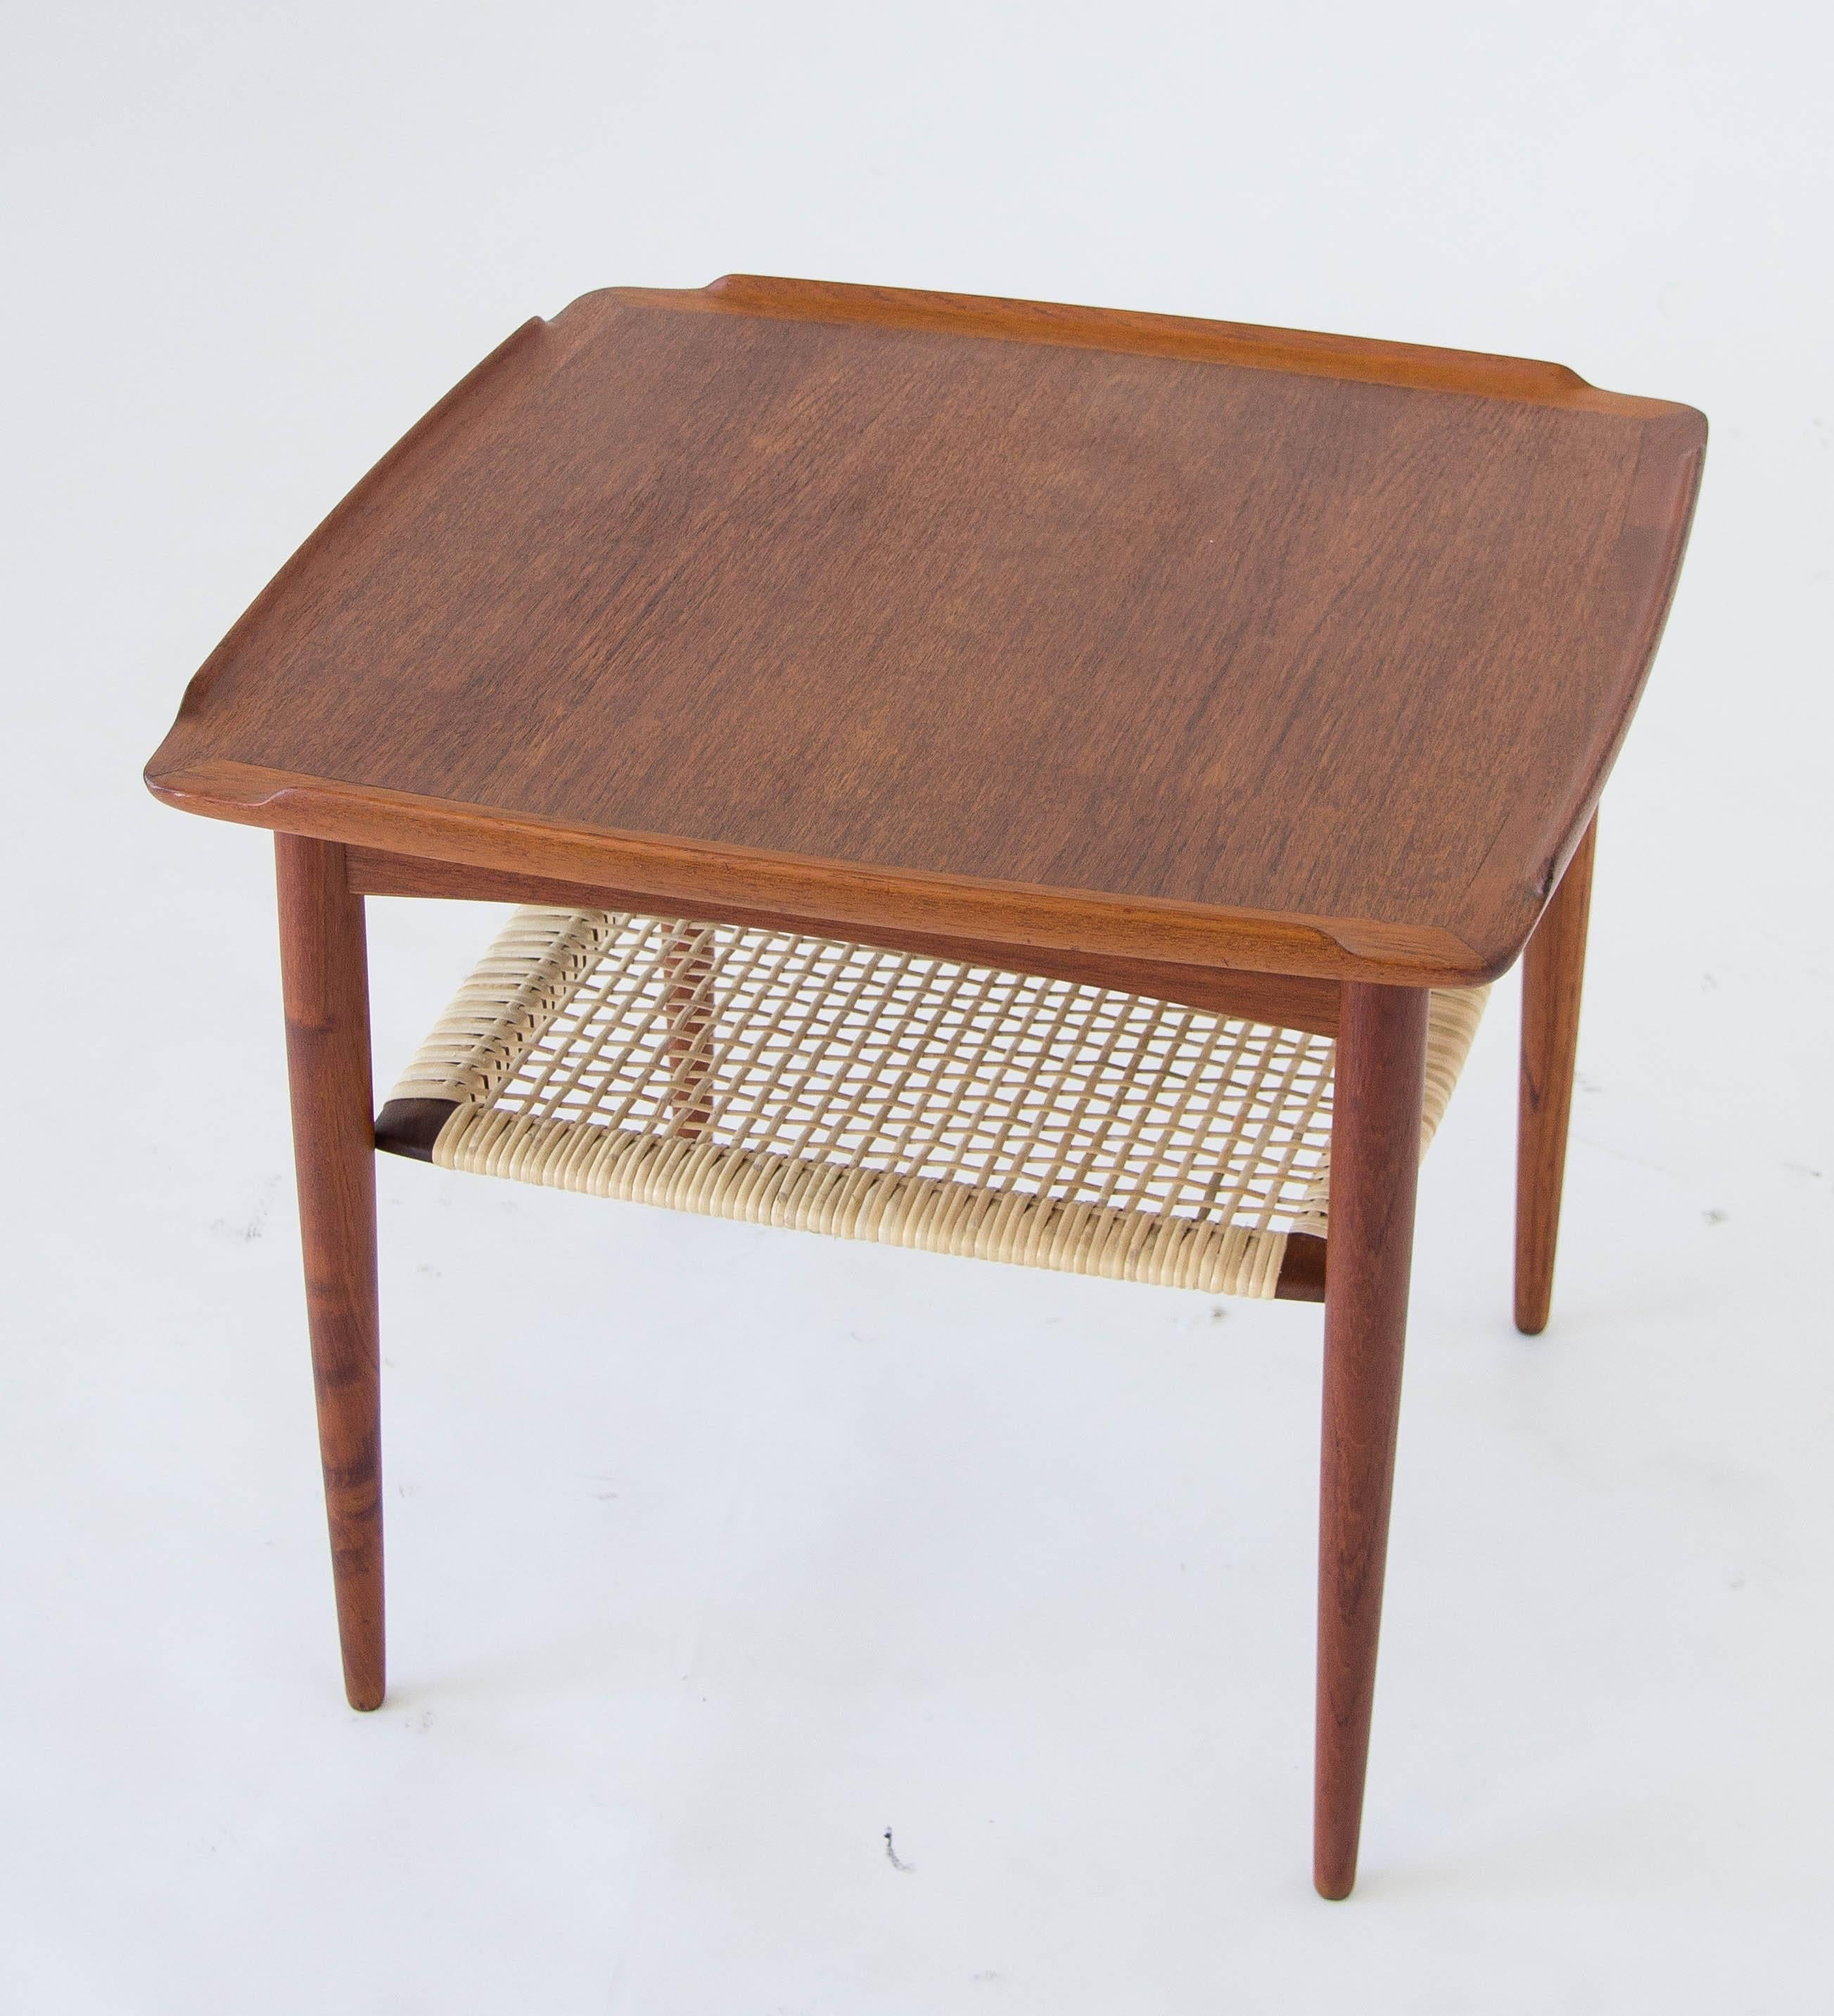 Scandinavian Modern Poul Jensen for Selig Square Side Table with Cane Shelf